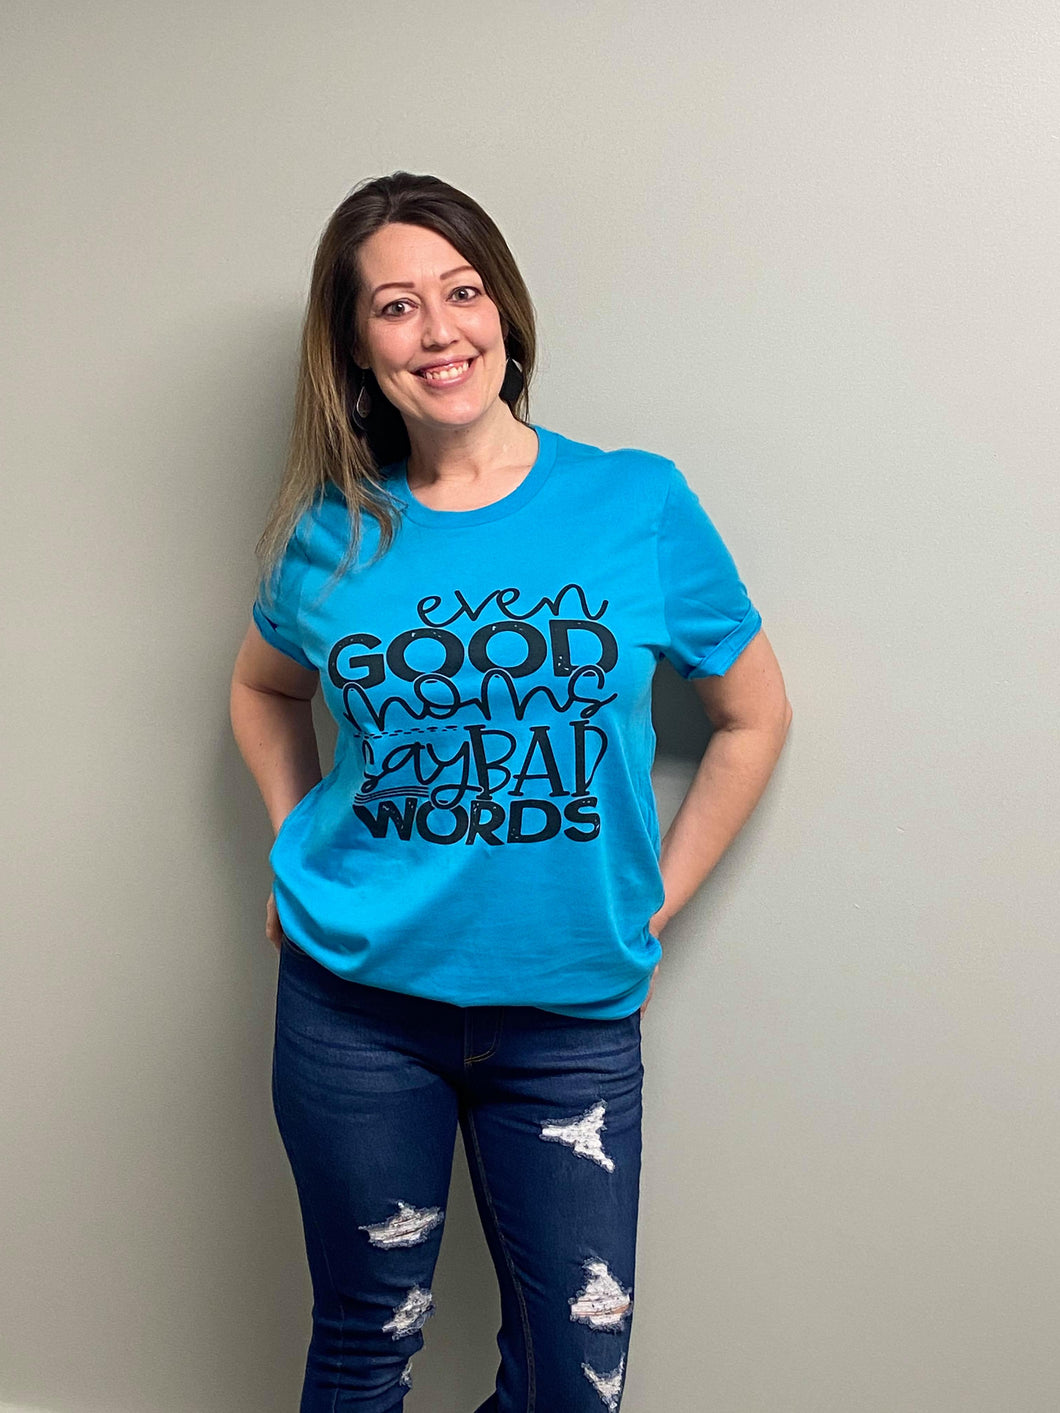 Even good moms say bad words t-shirt